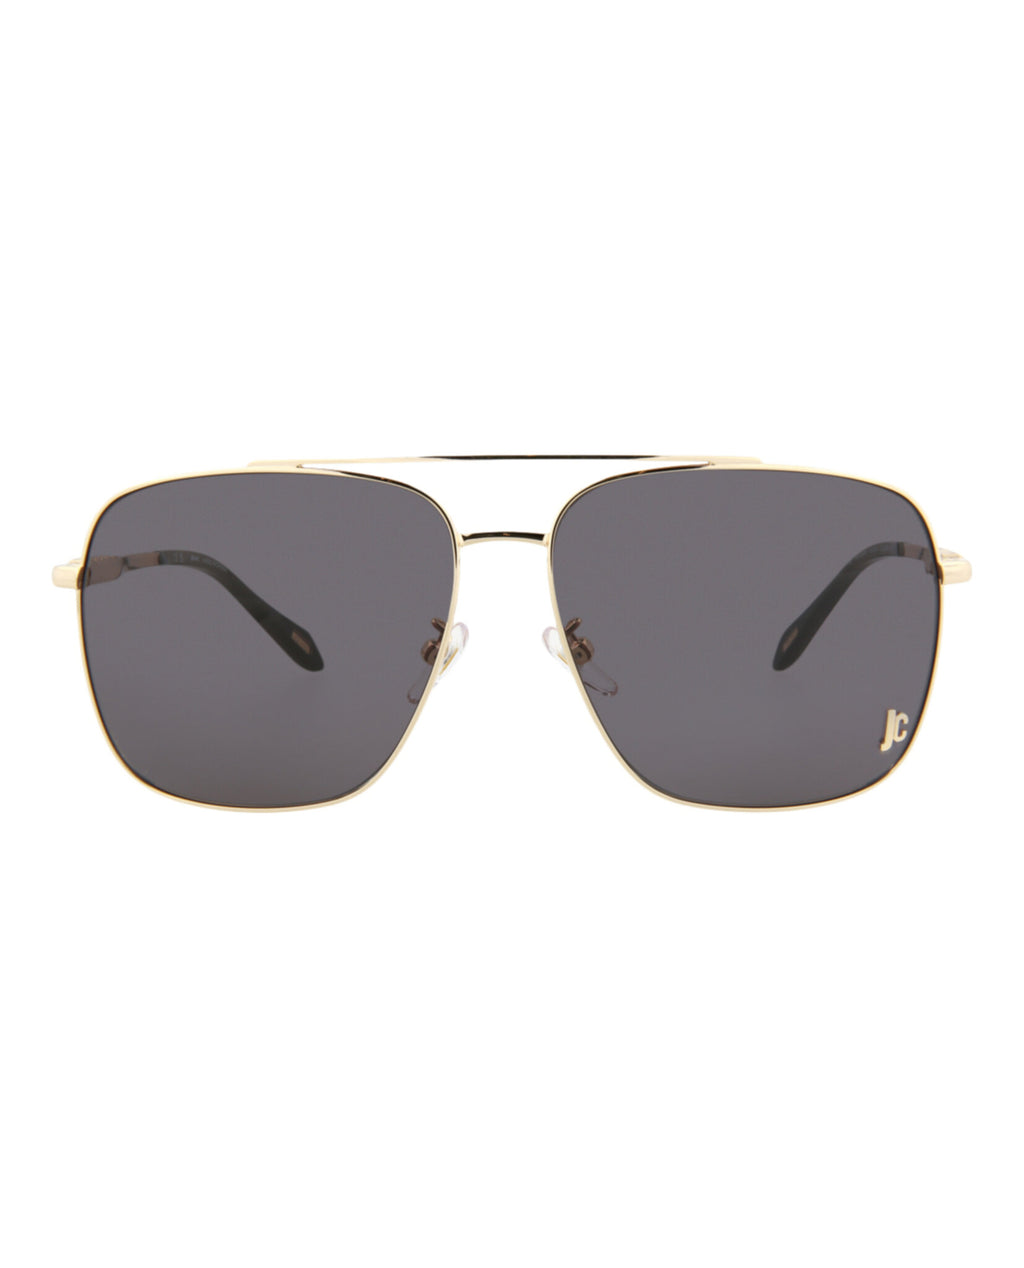 Just Cavalli Core Sunglasses Style # Style #SJC030K– Ruumur